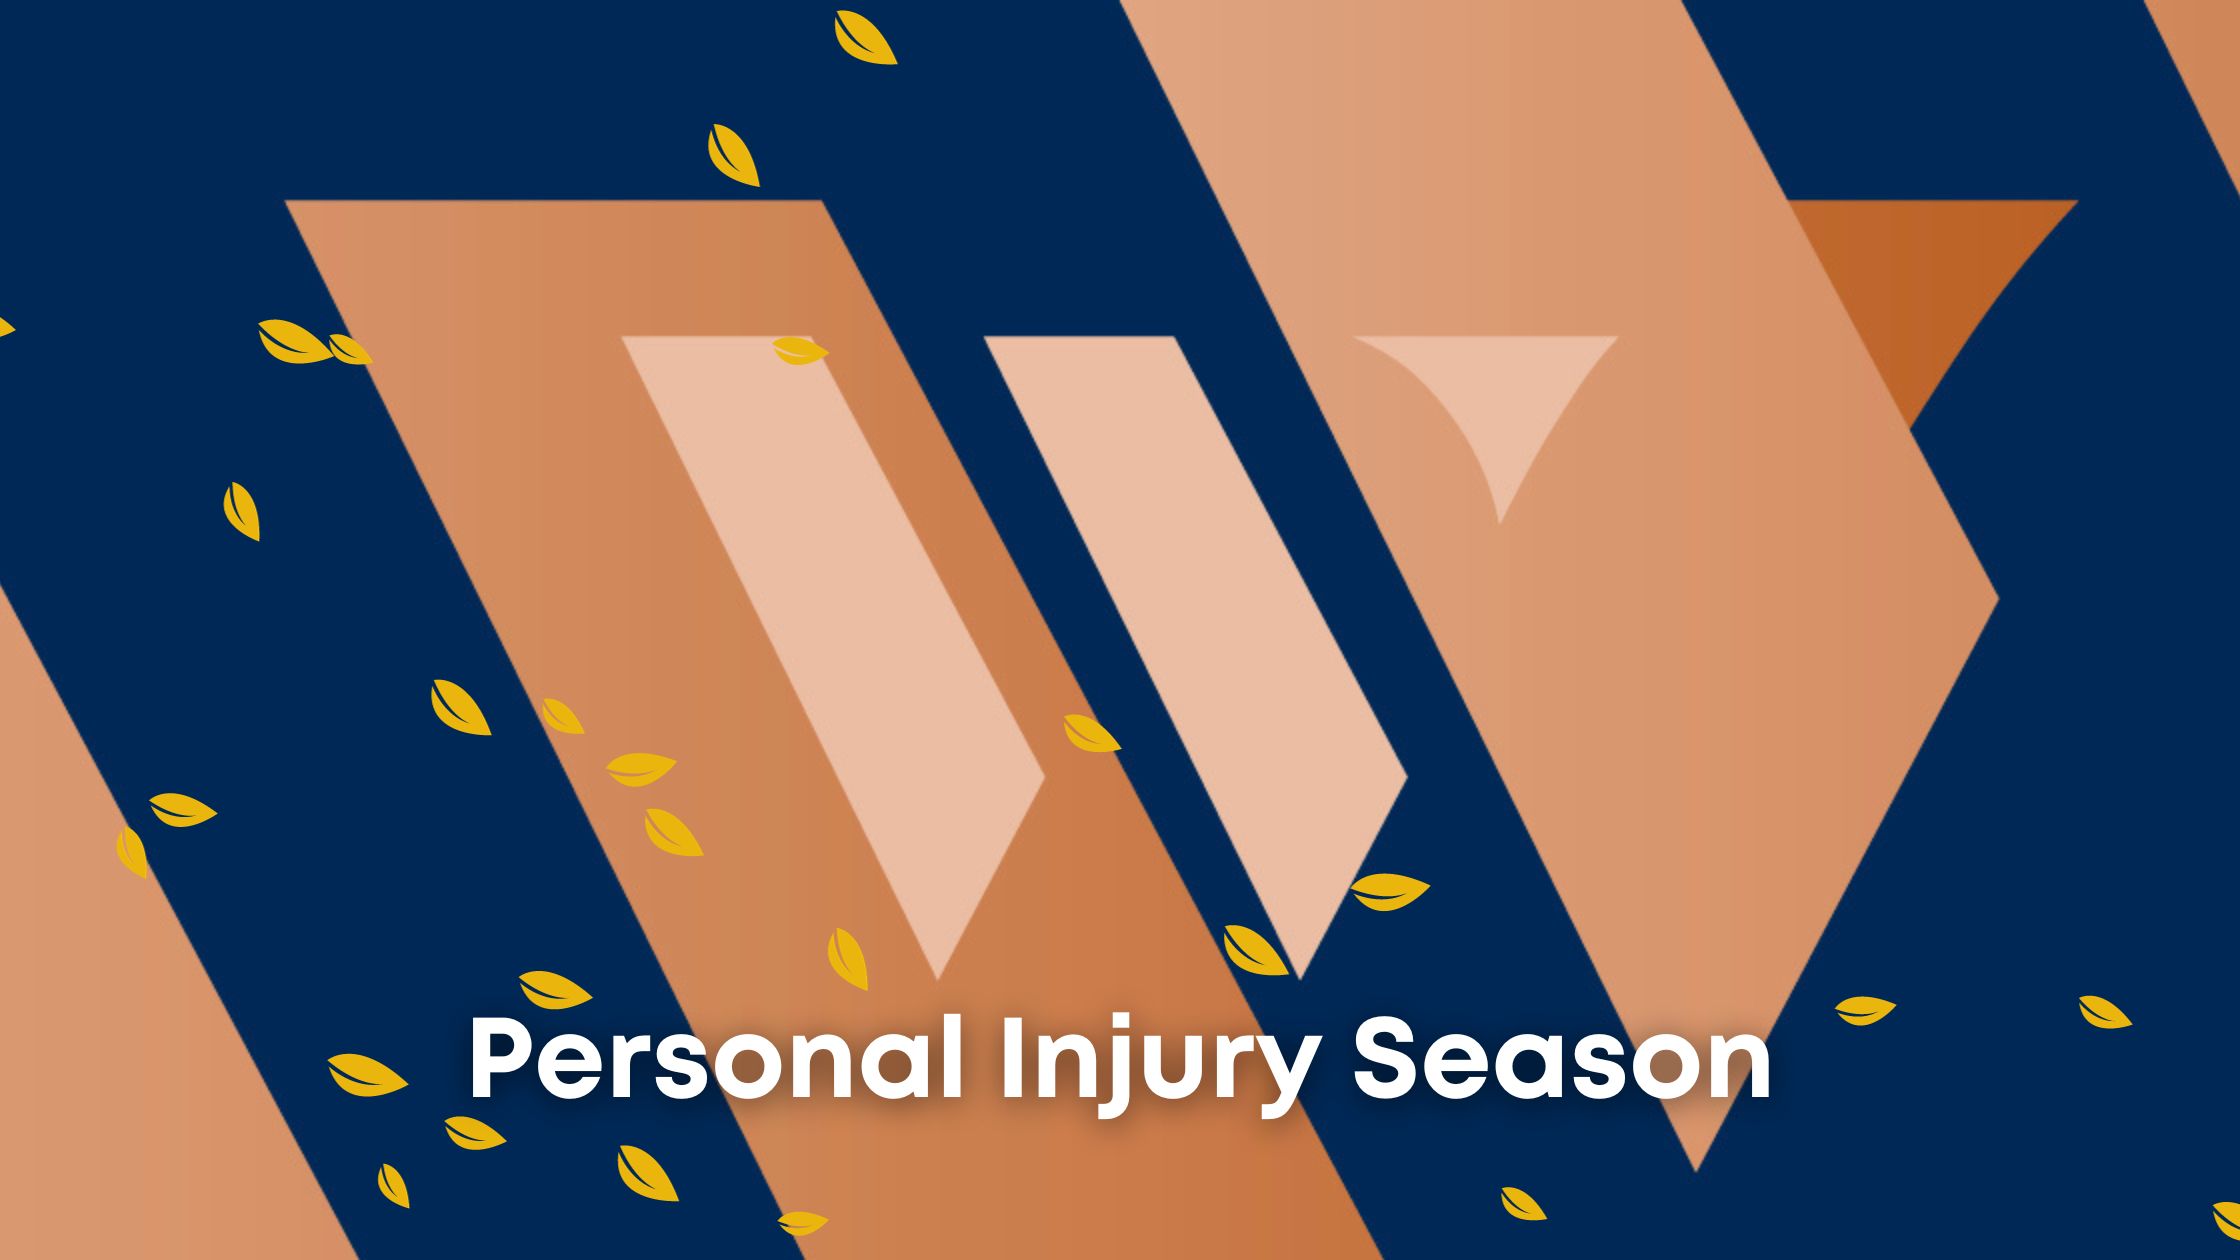 Personal Injury Season, Personal Injury, Woolliscrofts, Autumn Leaves over Woollliscrofts Background,